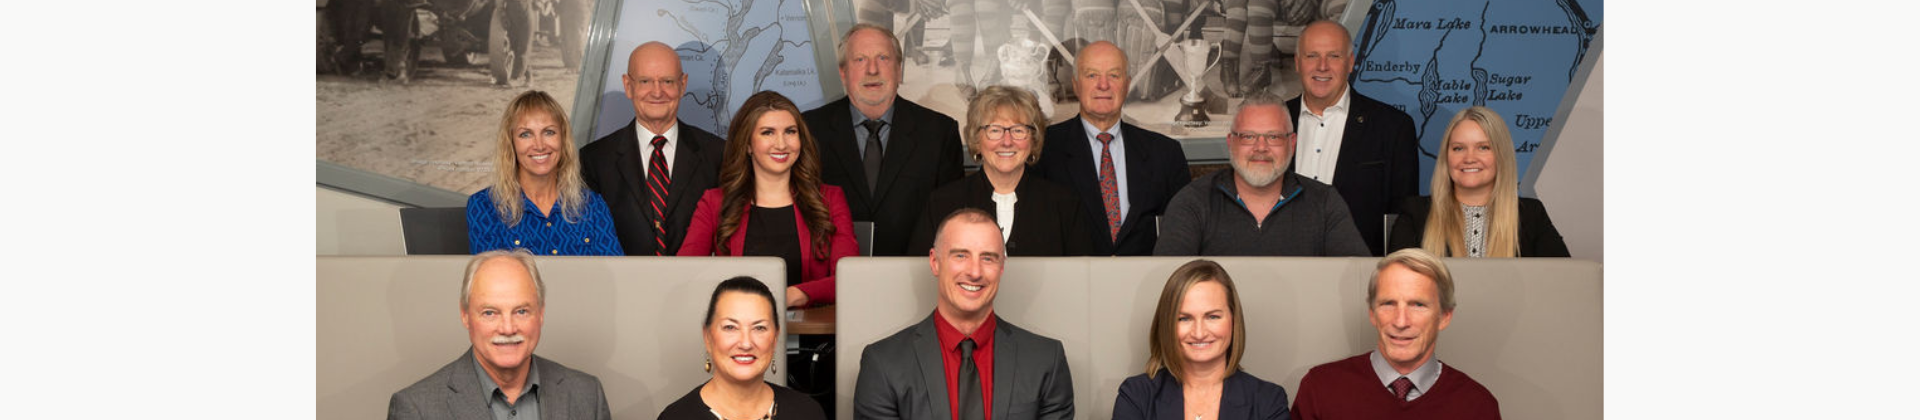 2022 RDNO Board of Directors group photo